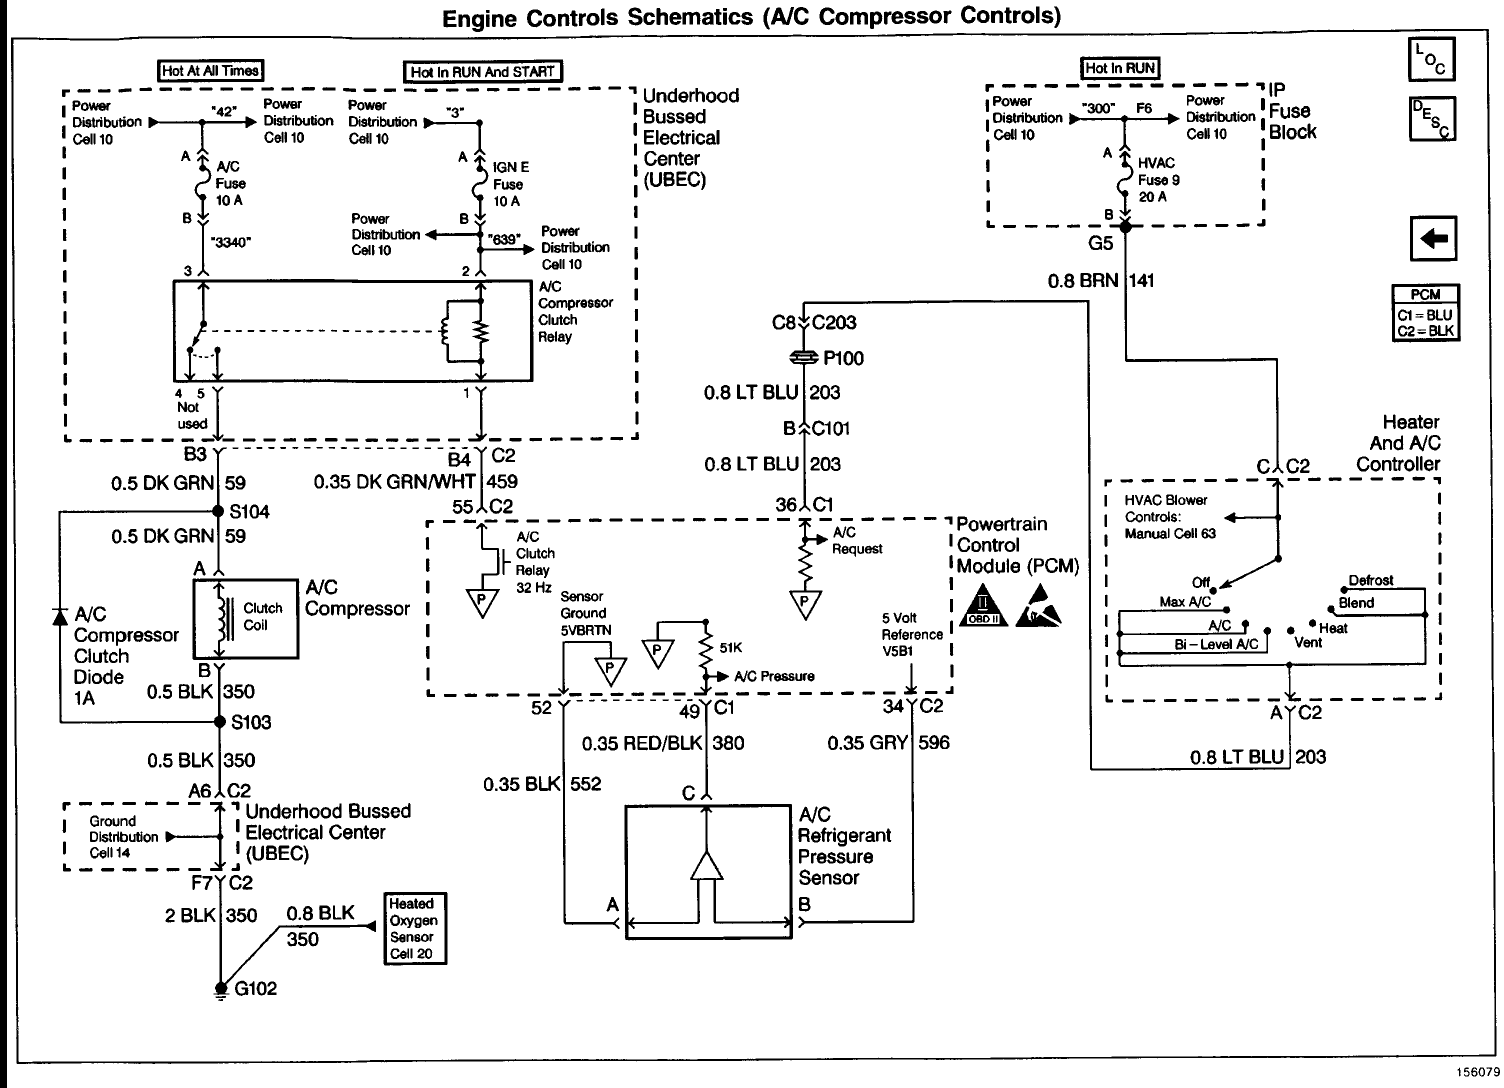 Need AC wiring diagram - Blazer Forum - Chevy Blazer Forums  1992 Chevy S10 Pickup Wiring Diagram    Blazer Forum